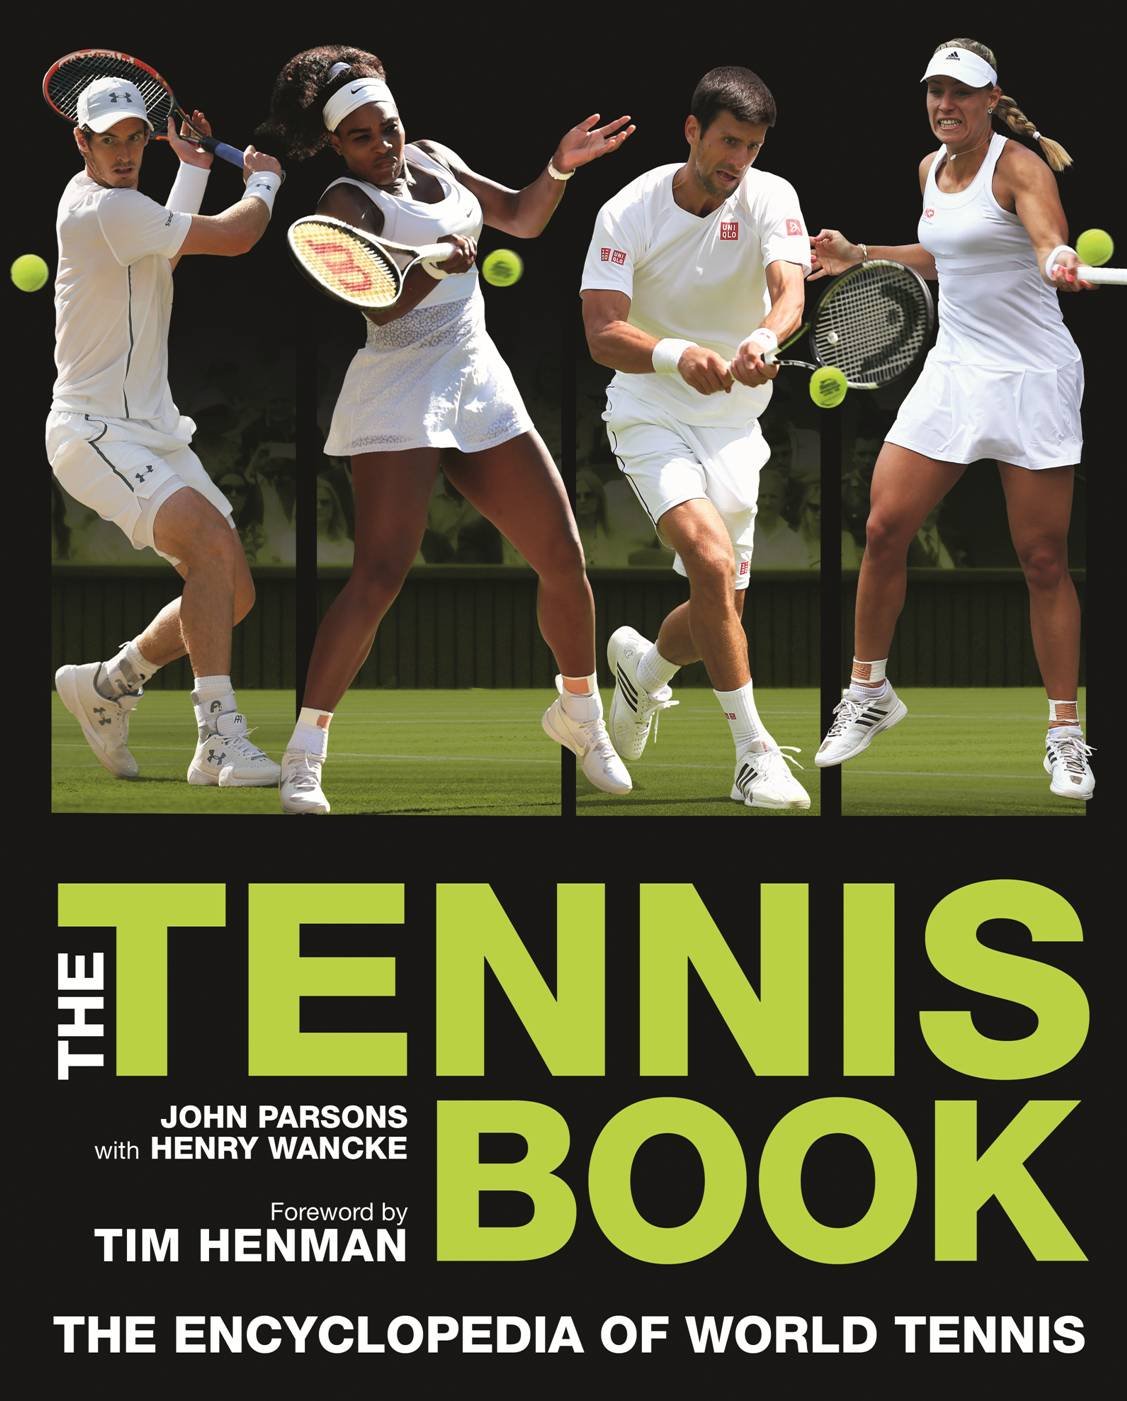 The Tennis book :  the encyclopedia of world tennis